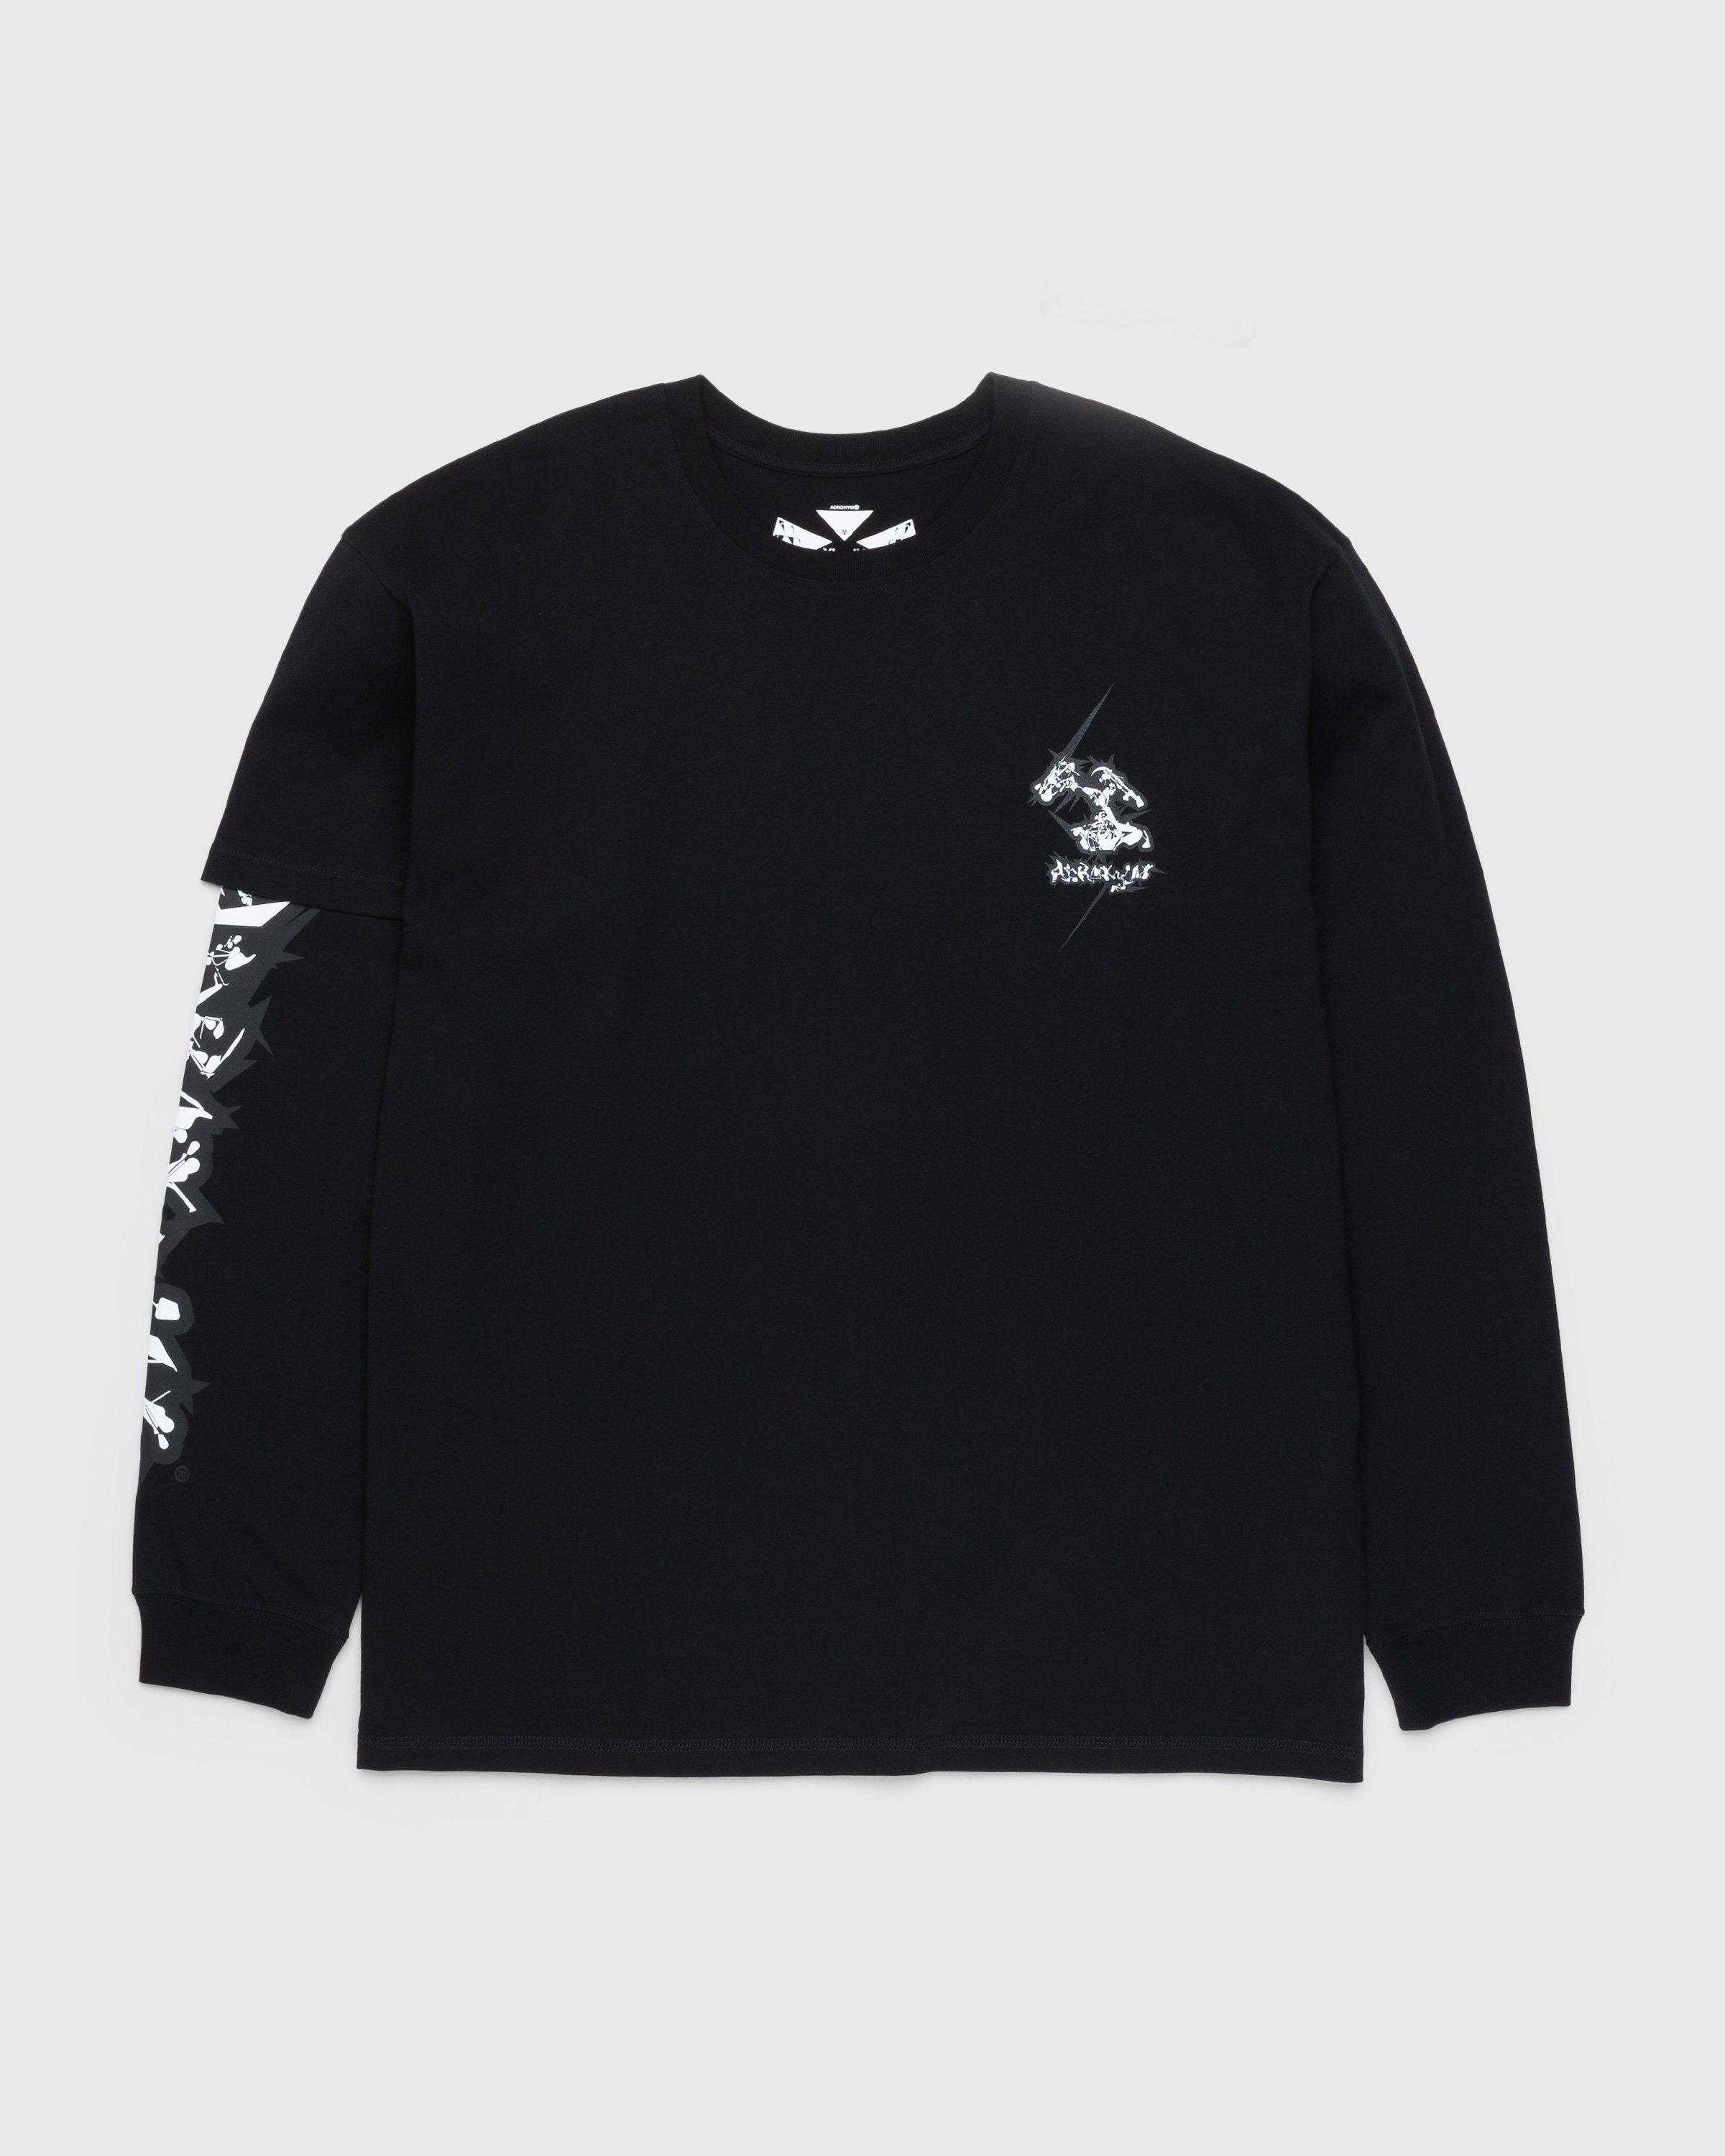 ACRONYM – S29-PR-B Organic Cotton Longsleeve T-Shirt Black by ACRONYM